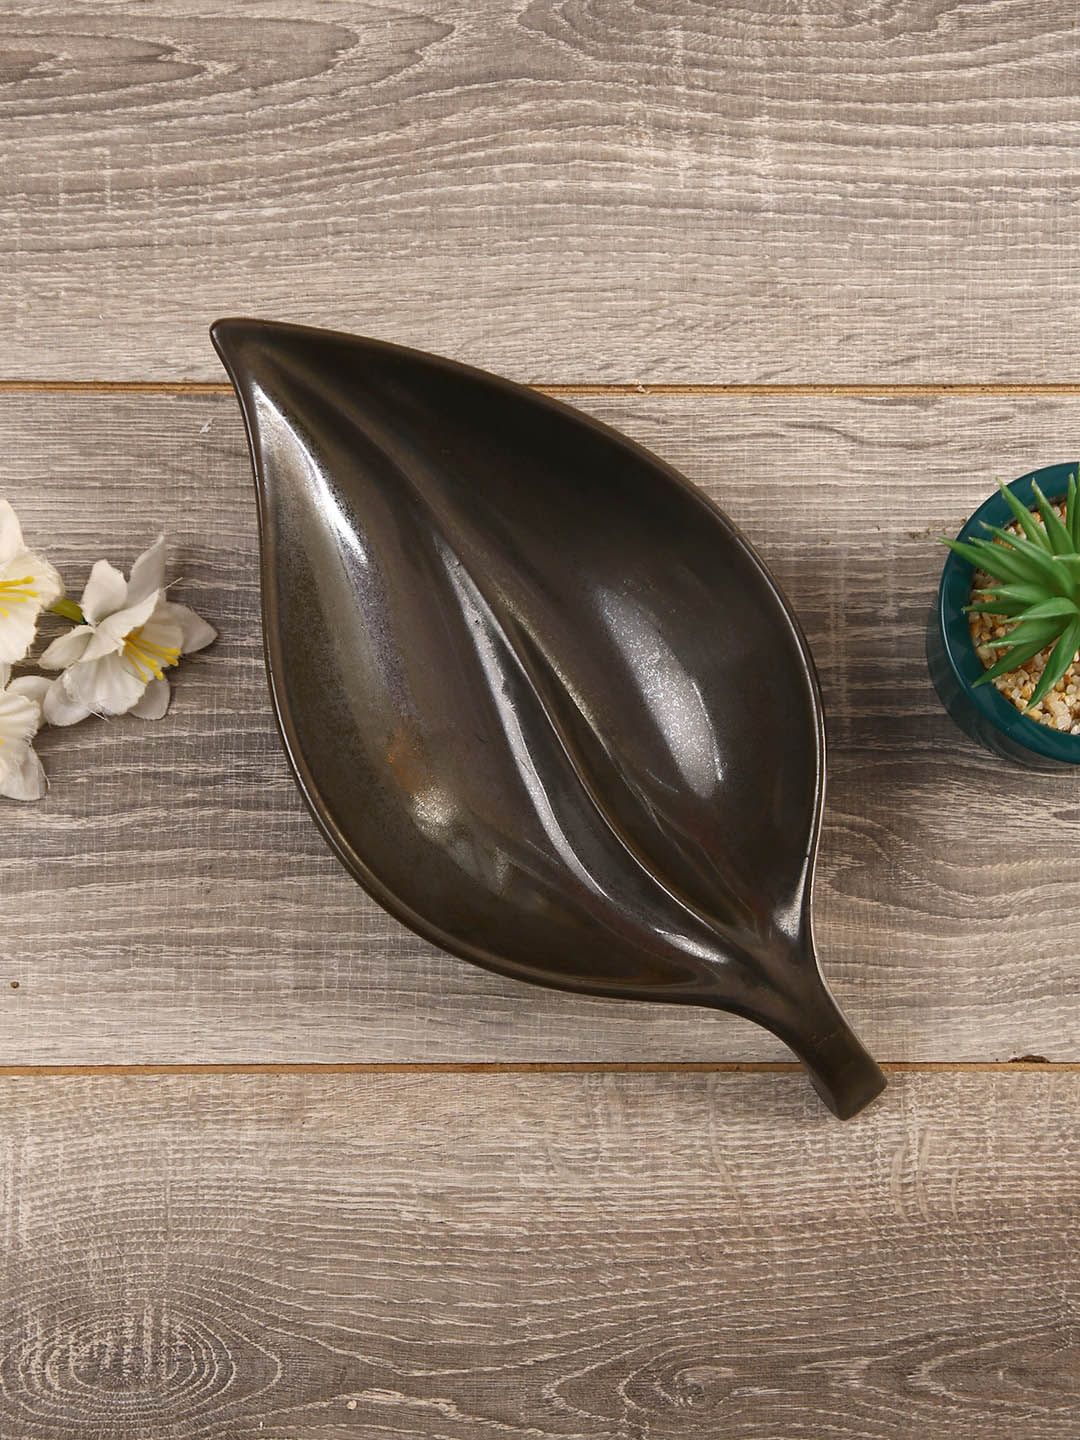 Aapno Rajasthan Brown Leaf Structure Ceramic Serving Platter Price in India